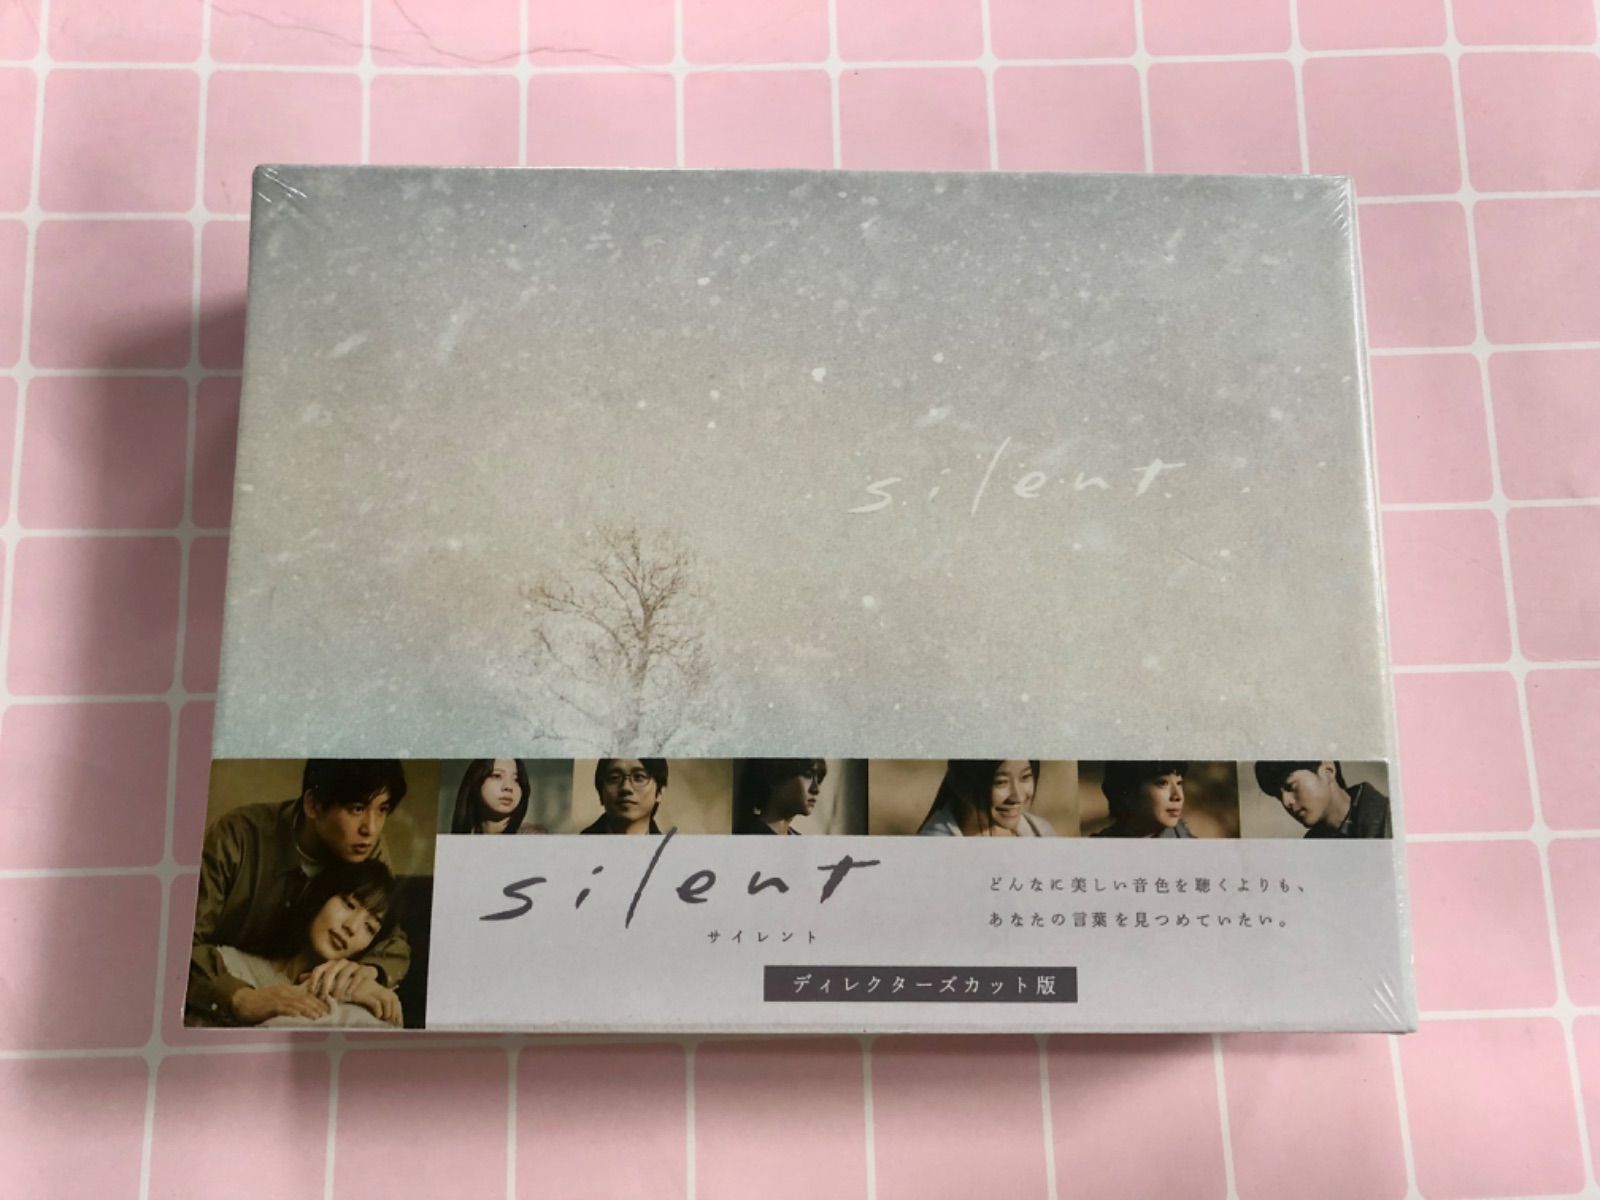 silent ディレクターズカット版 DVD-BOX - メルカリ